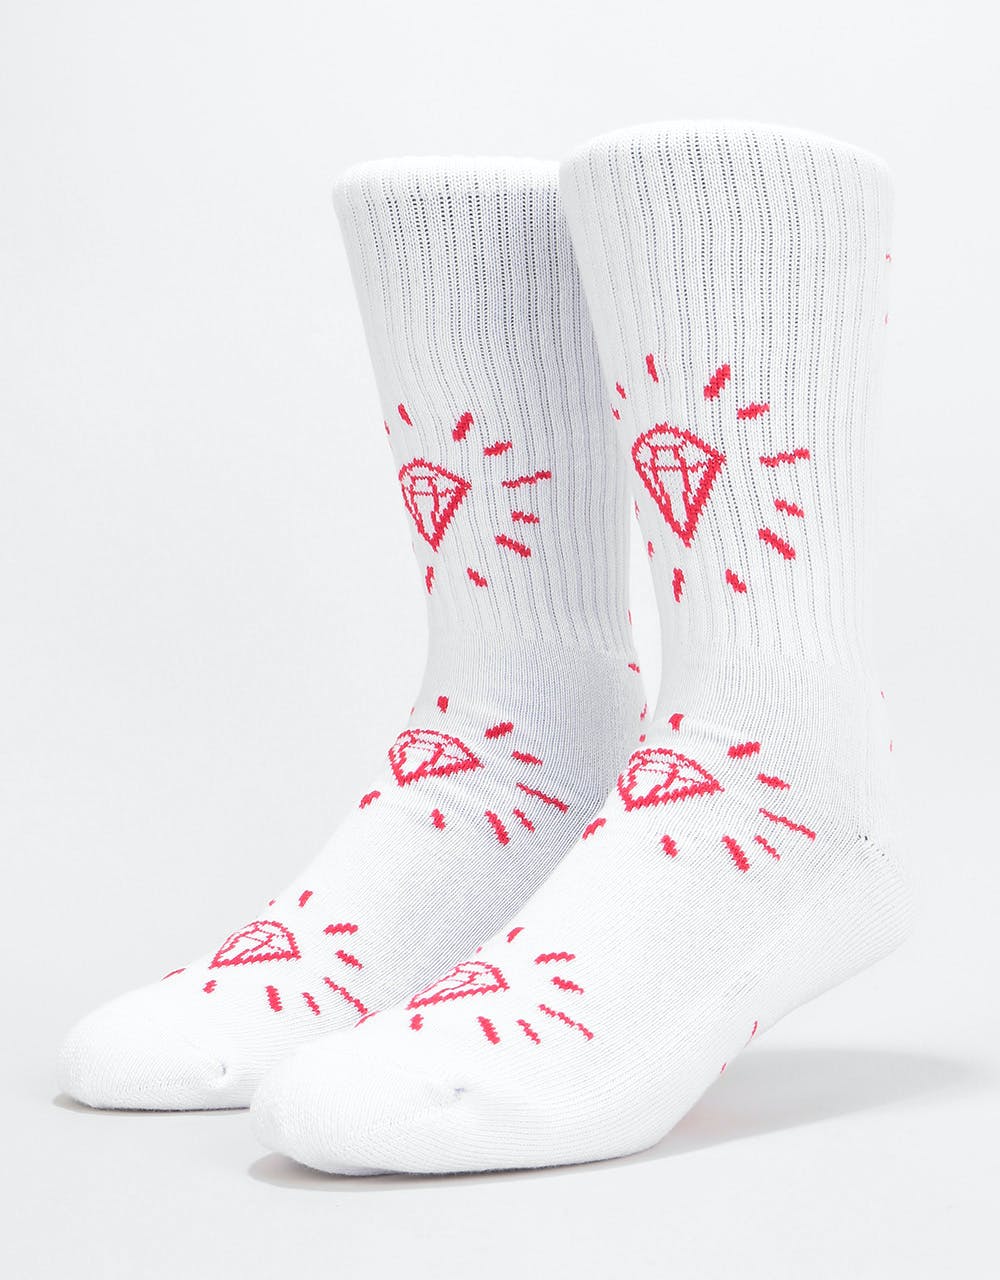 Diamond Supply Co. Outshine Crew Socks - White